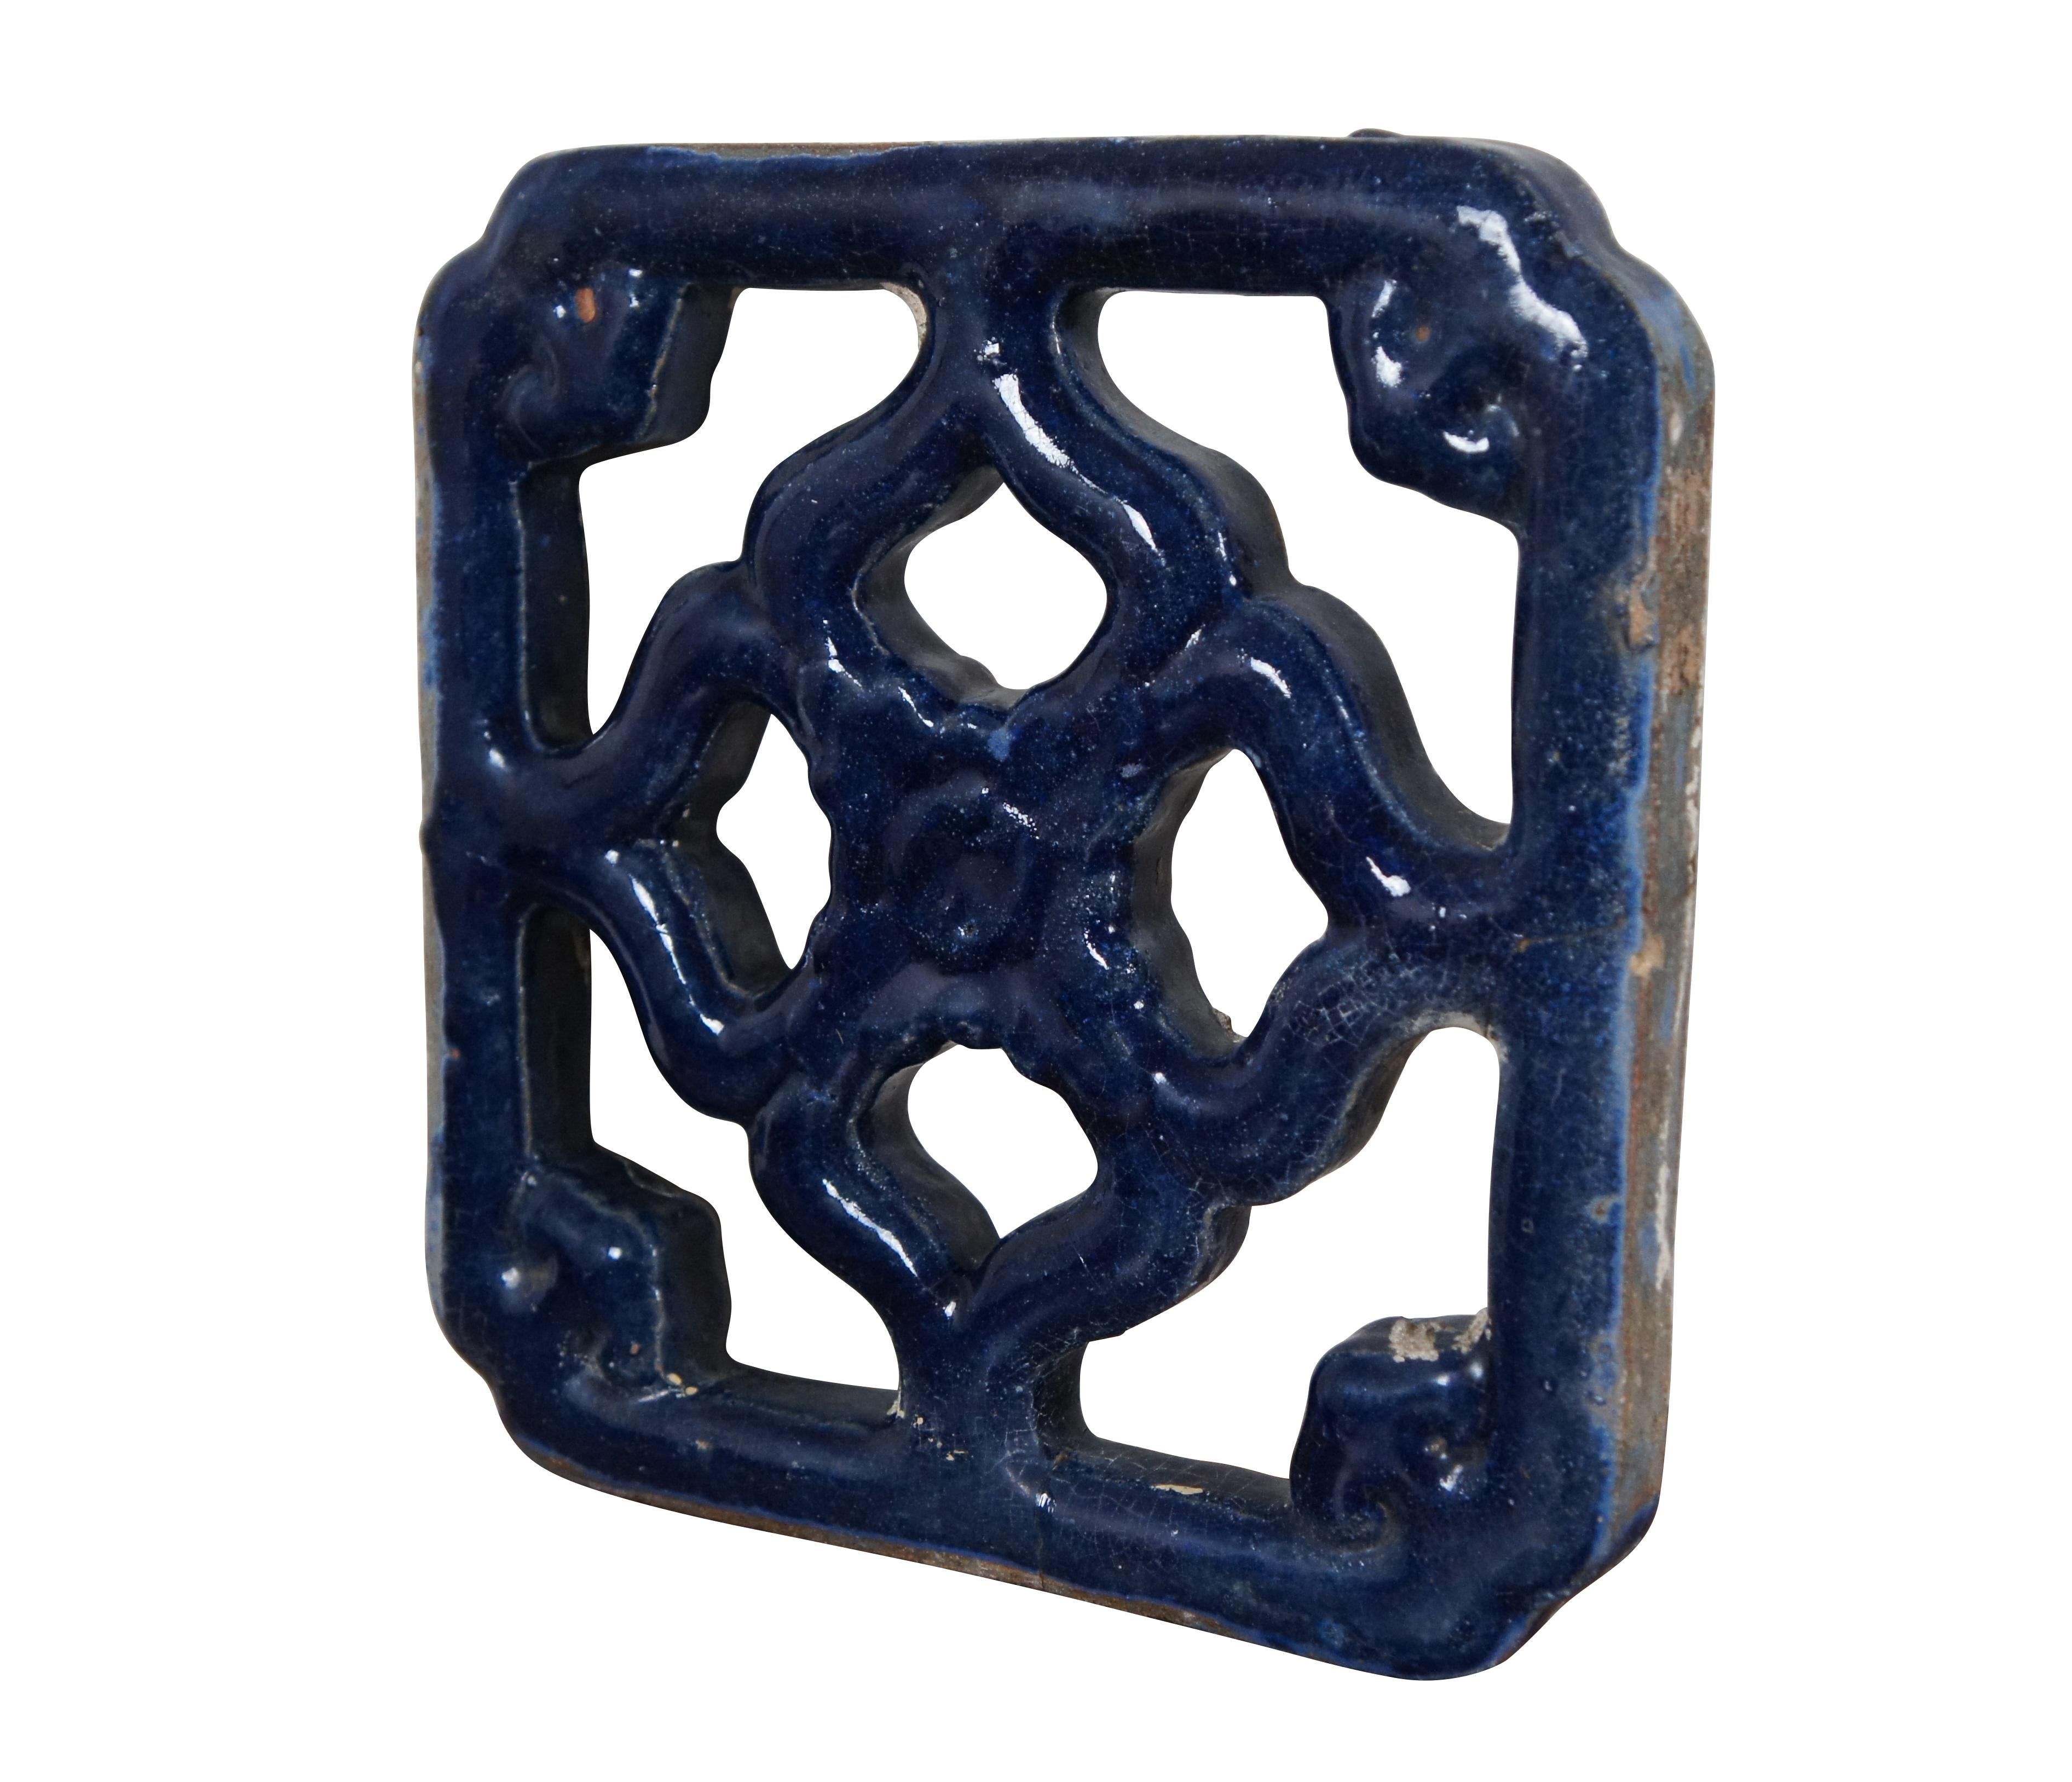 Pair of vintage pierced floral ceramic blue glazed vent / grille tiles.  

Dimensions:
10.25